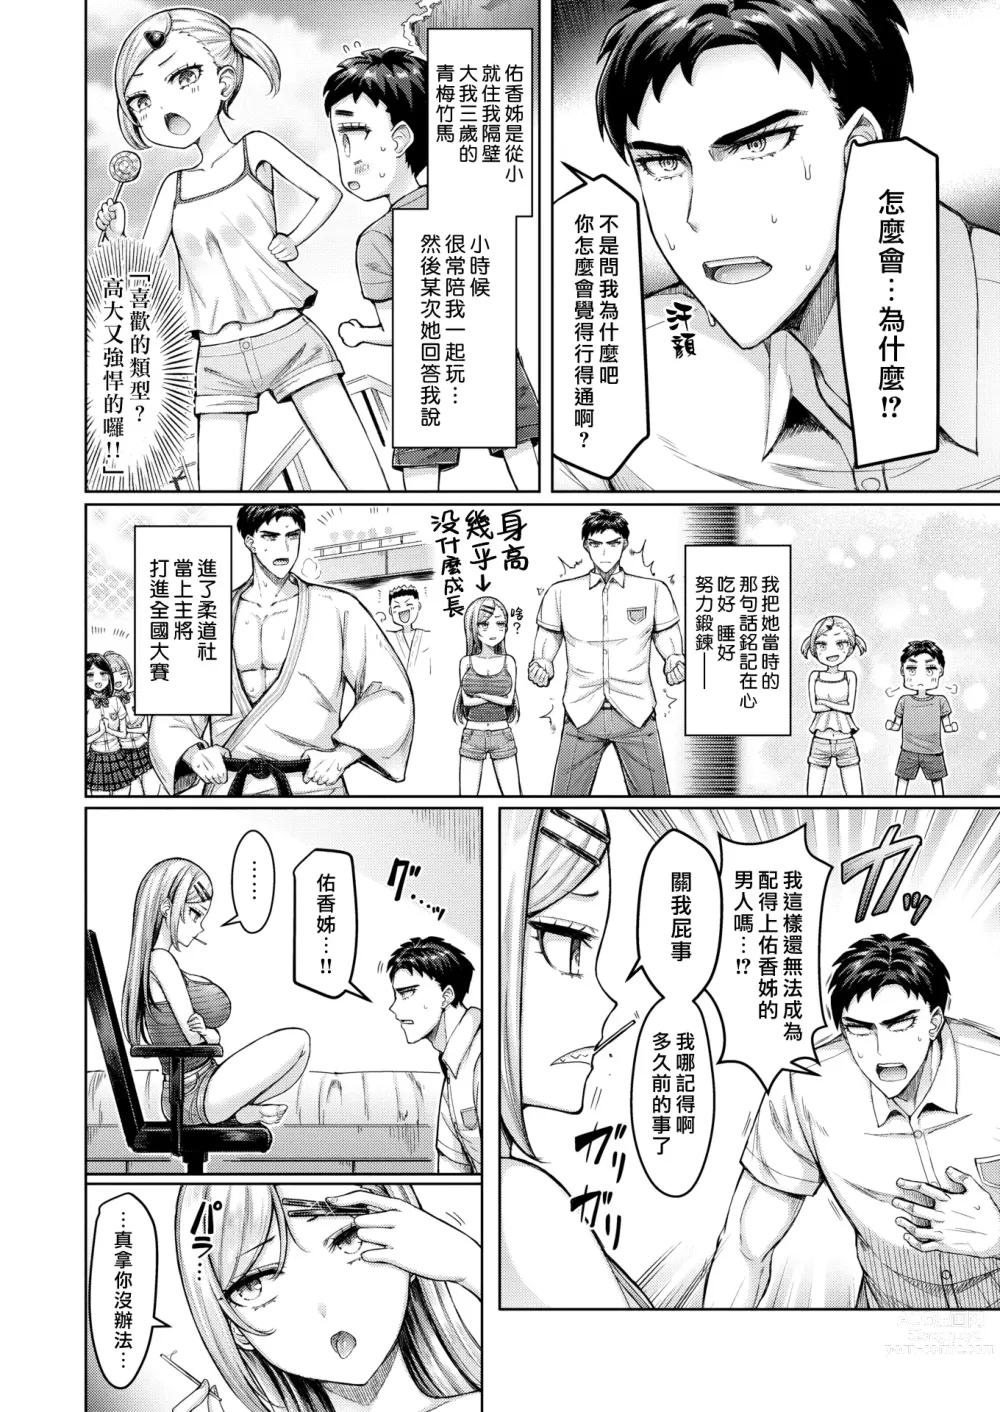 Page 2 of manga 老娘可不像糖果那麼天真啊!!